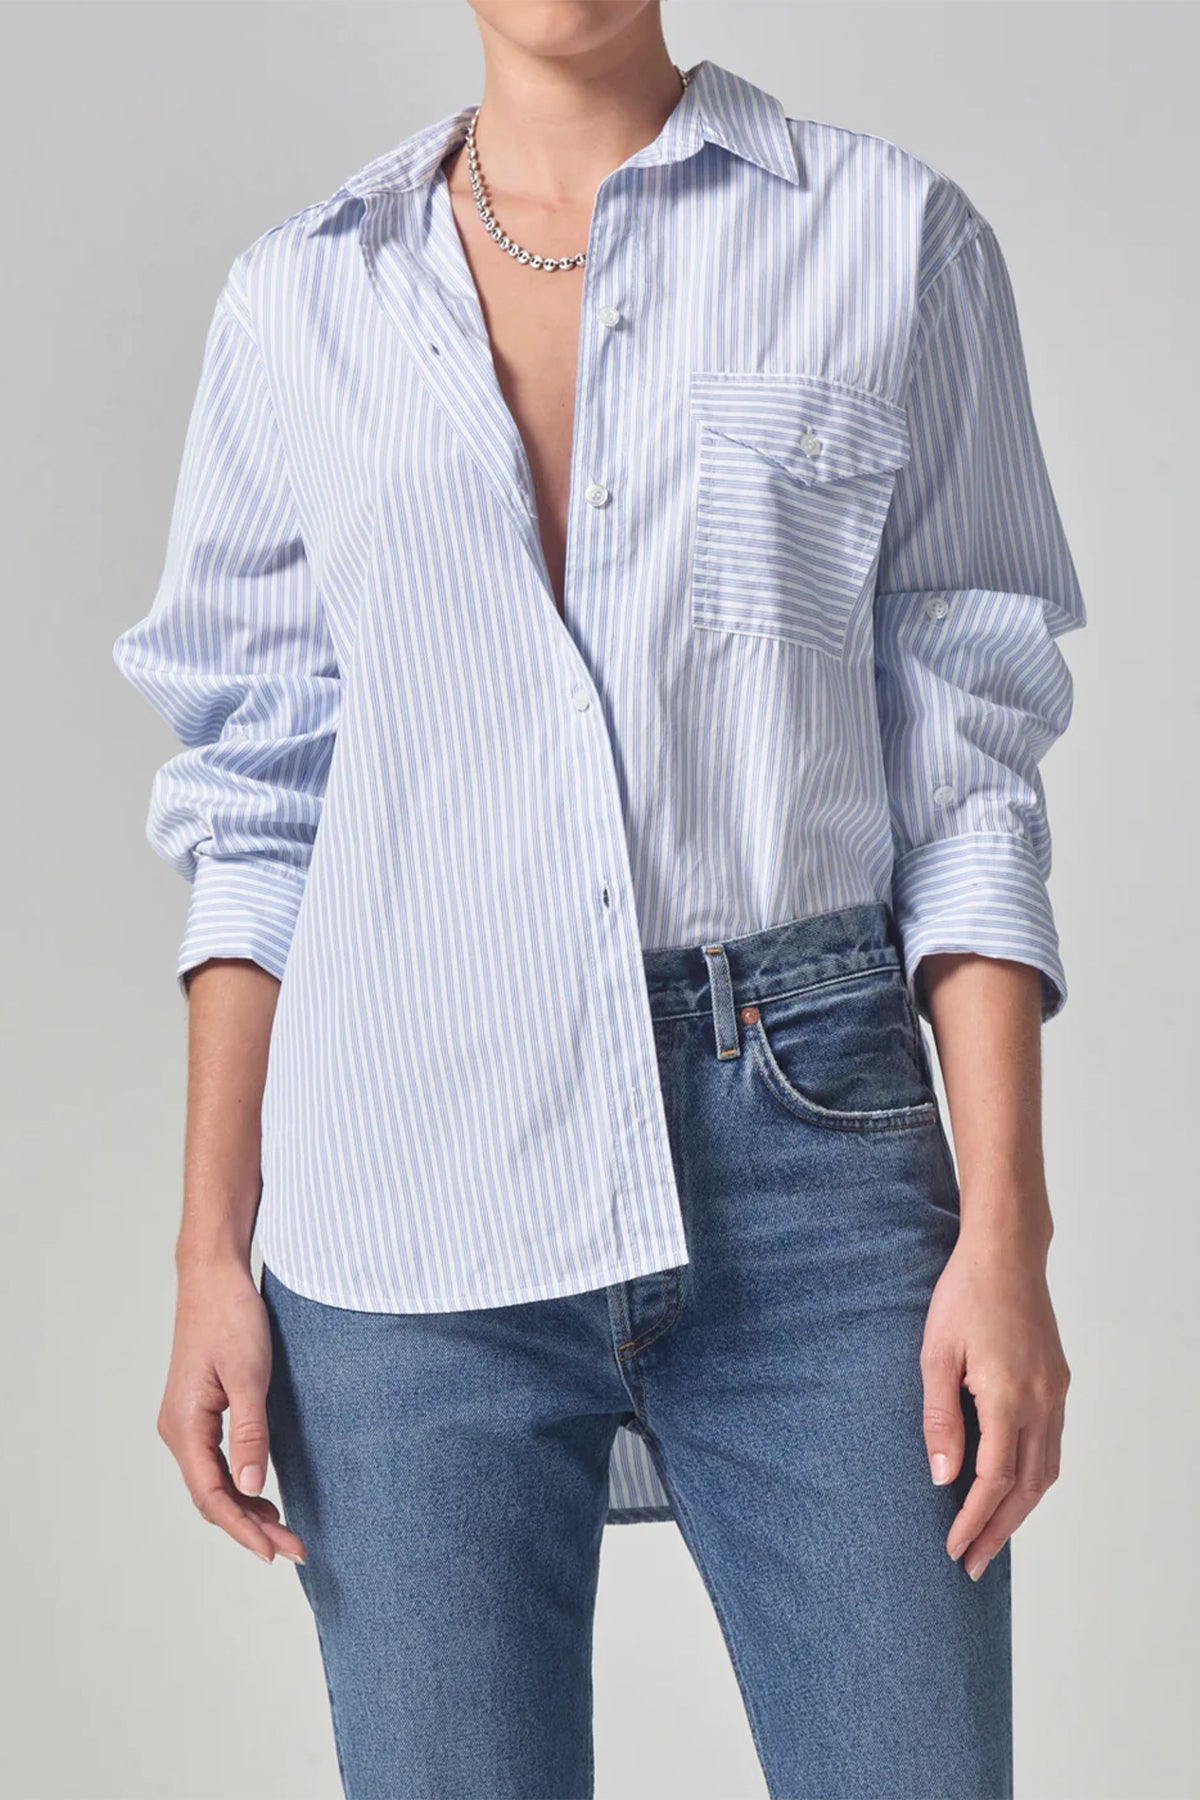 Shay Shirt in Mashu Stripe - shop-olivia.com